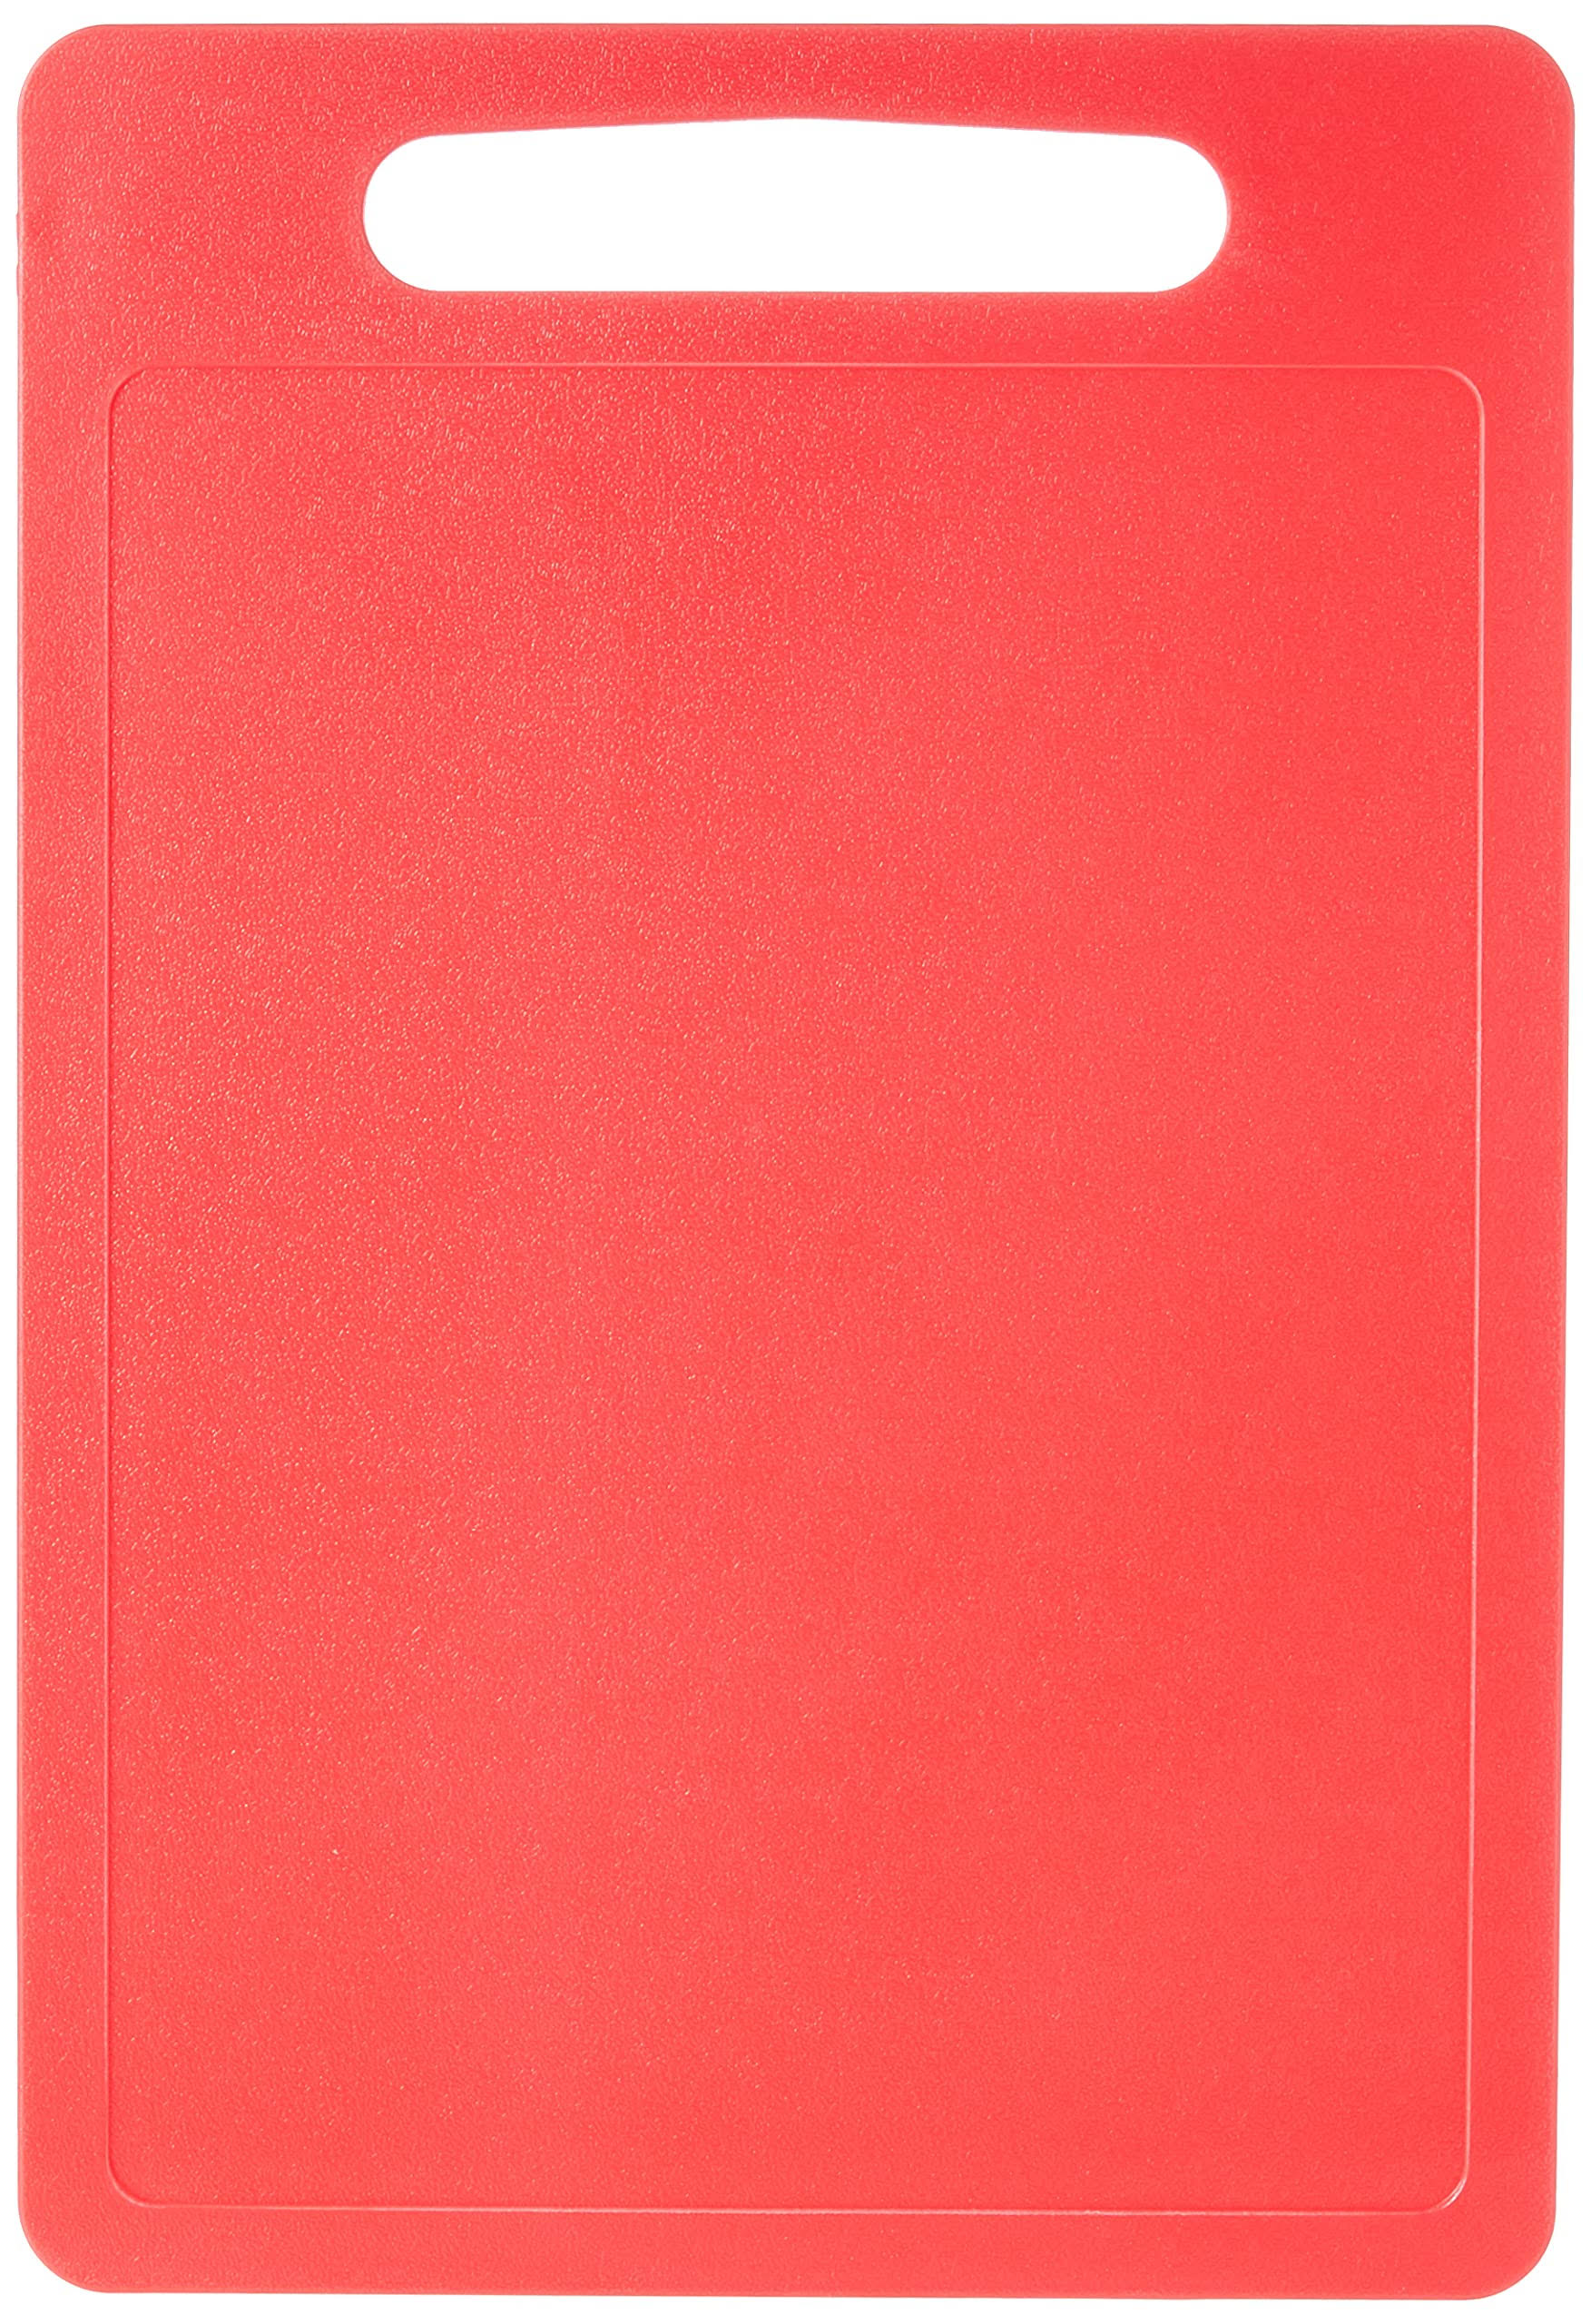 Chef Aid Poly Chopping Board 35 x 25cm Red [10E21052]